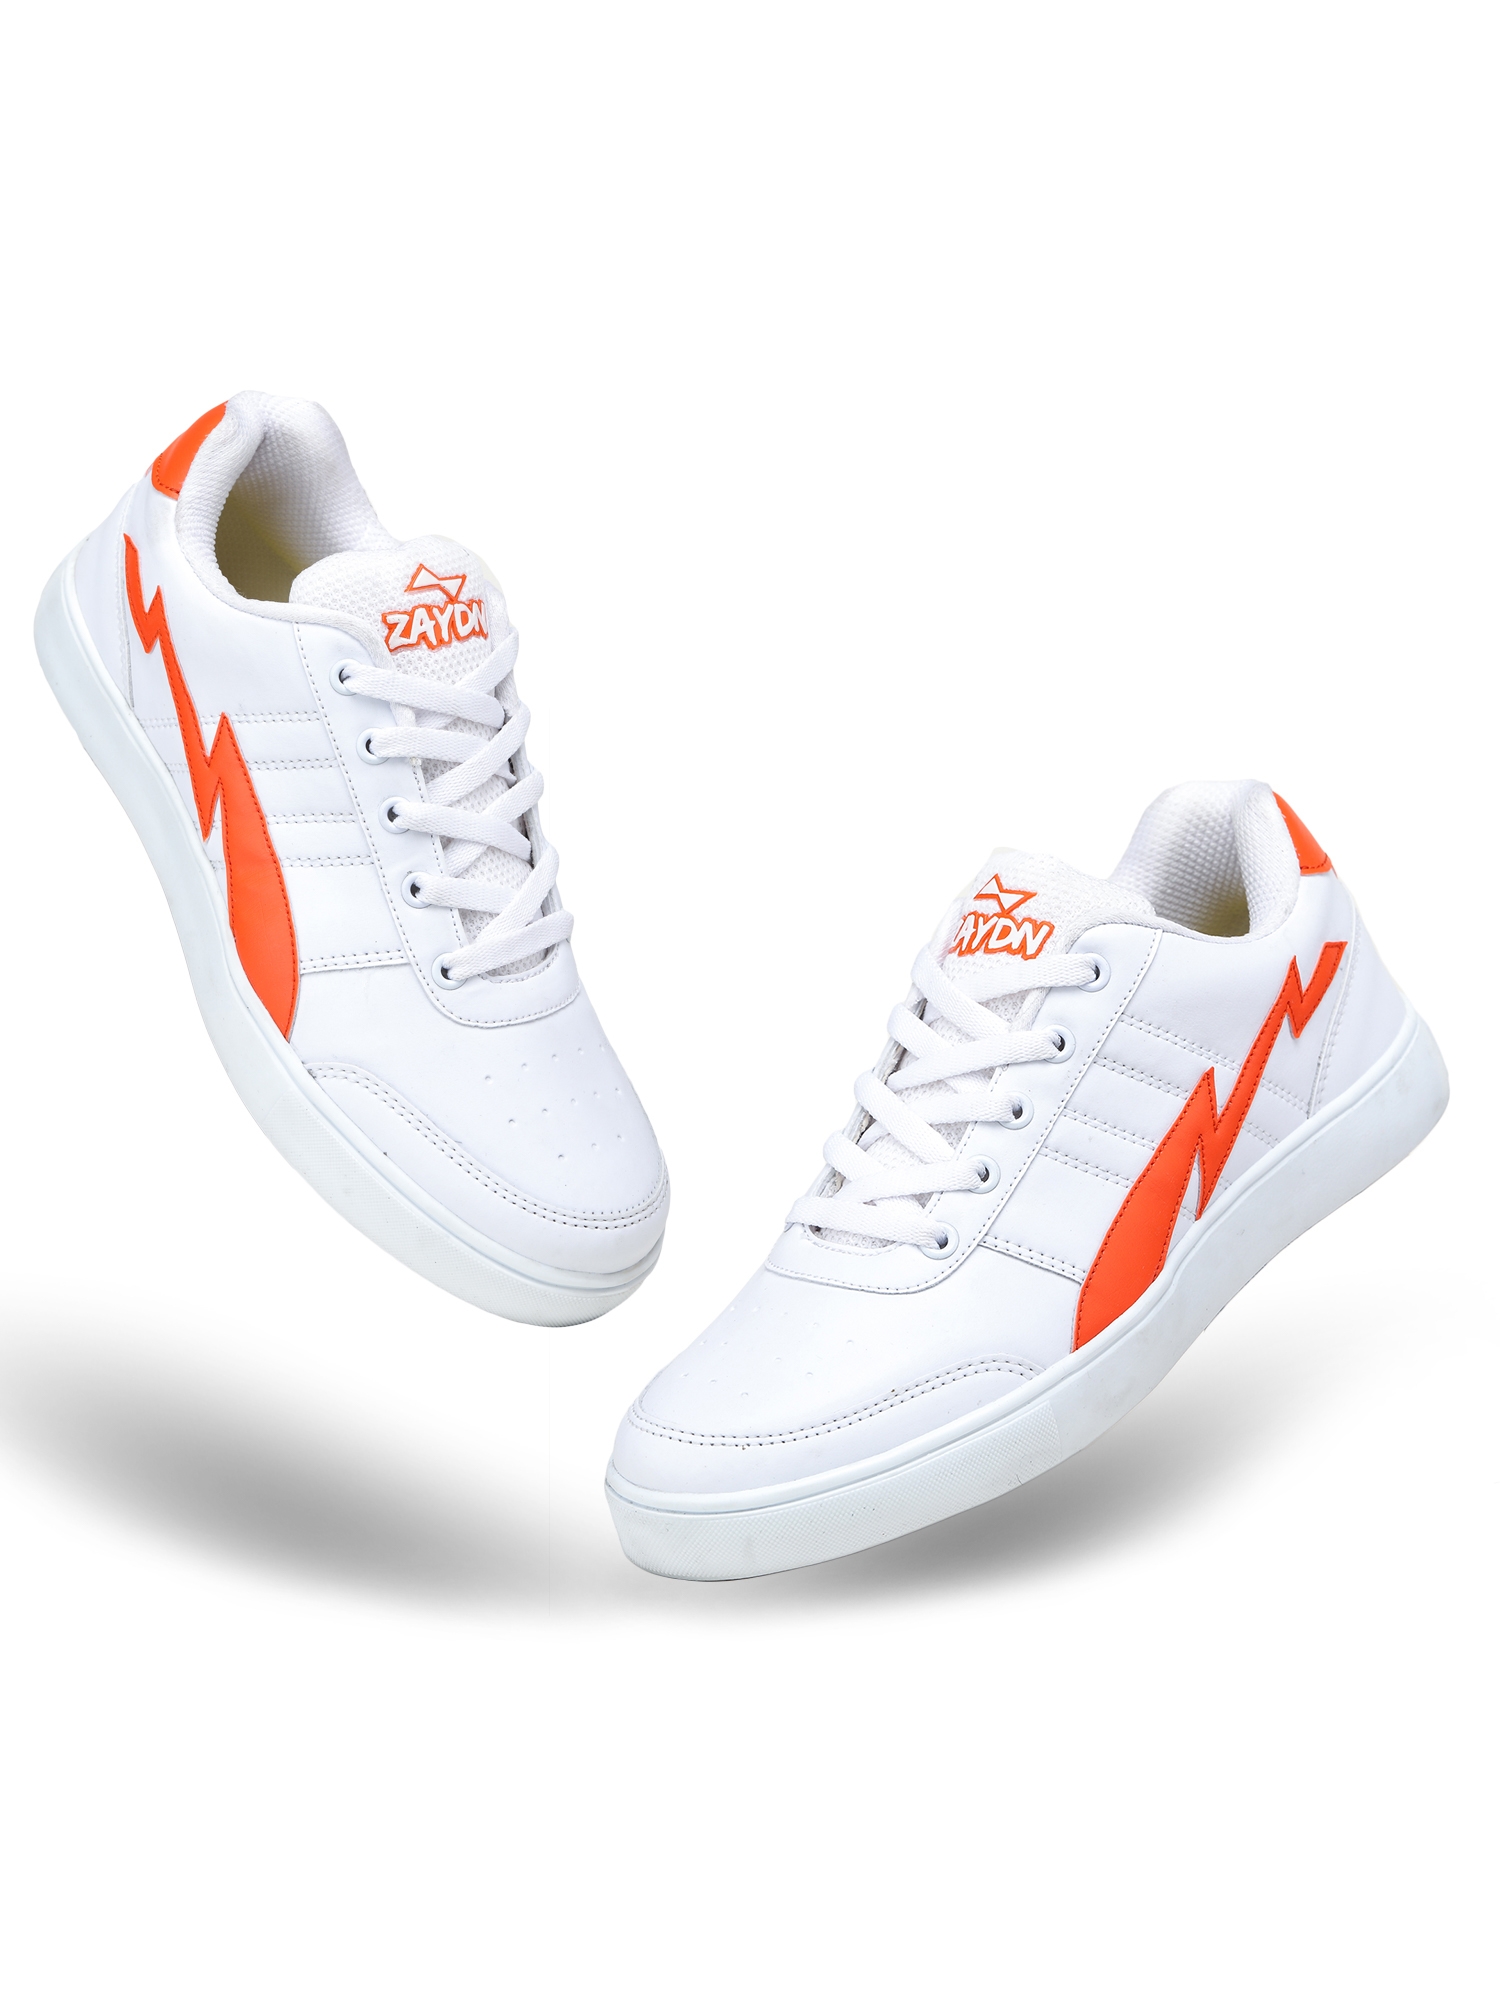 Orange Shoes | adidas Canada